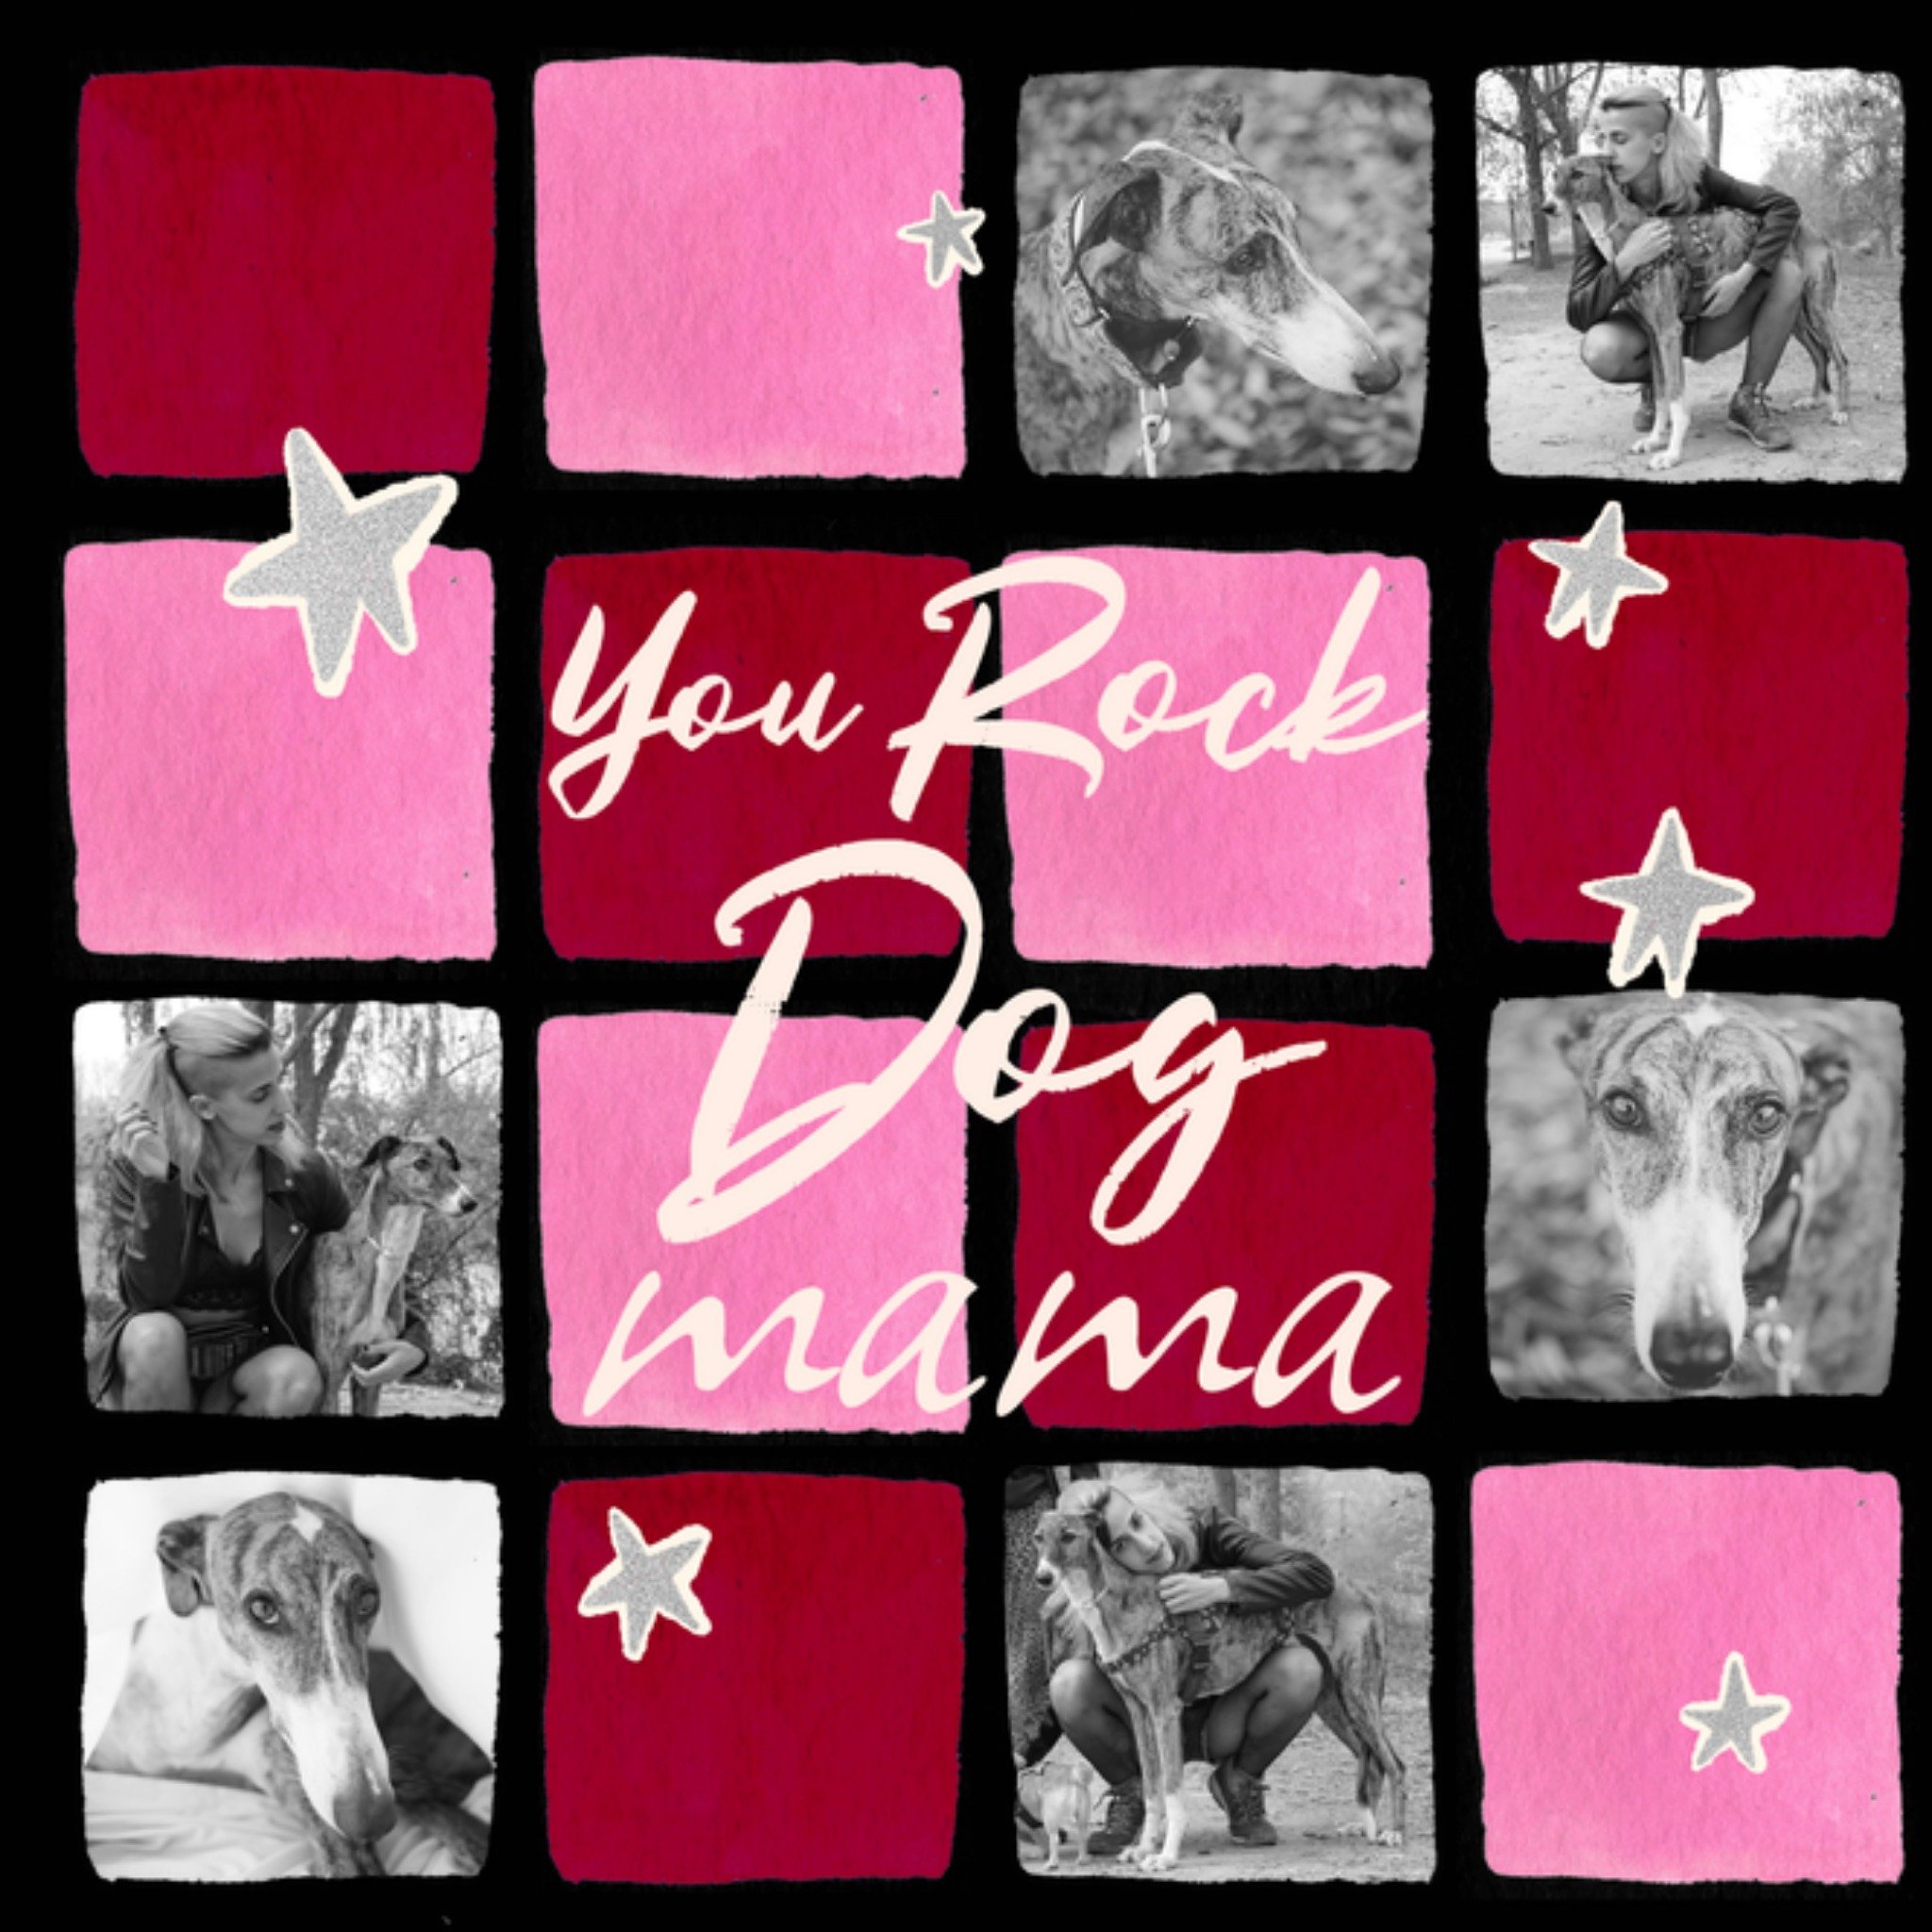 Moederdagkaart - You rock dog Mama - met fotos